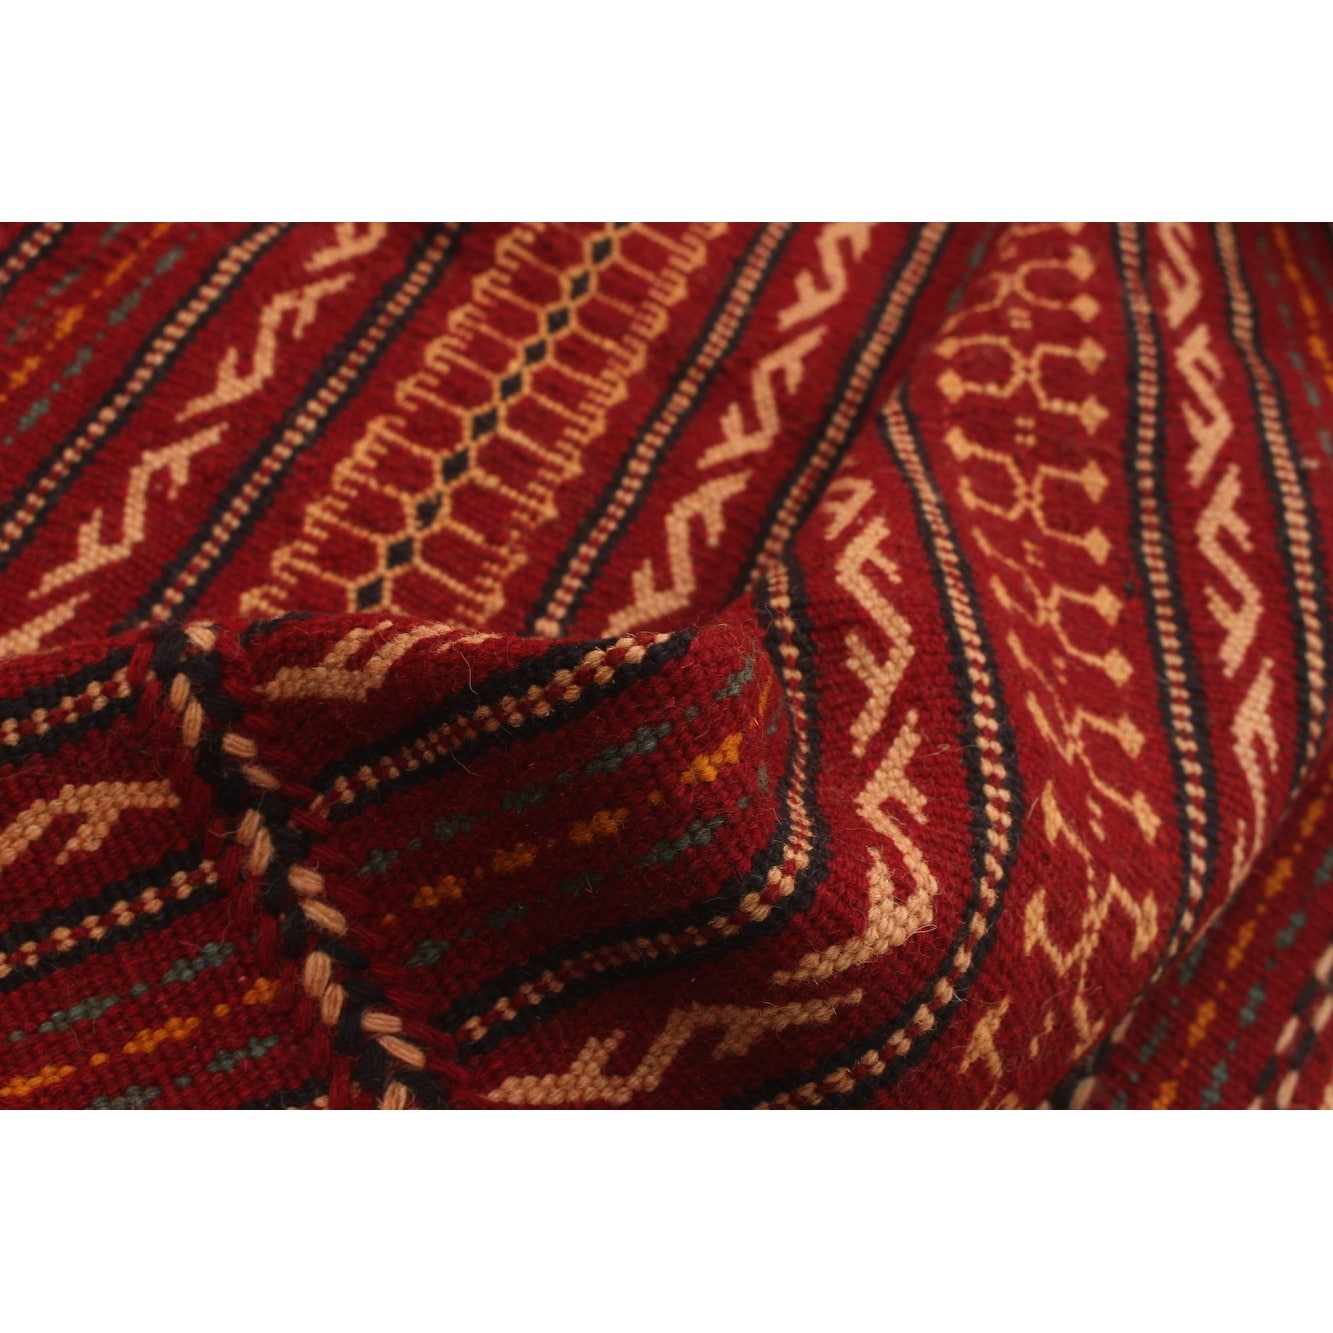 Ottoman Kashkoli Bordered Red Tapestry Kilim 3'3 x 5'1 Hand-Knotted Wool Rug eCarpet Gallery Area Rug for Living Room Bedroom 334637 